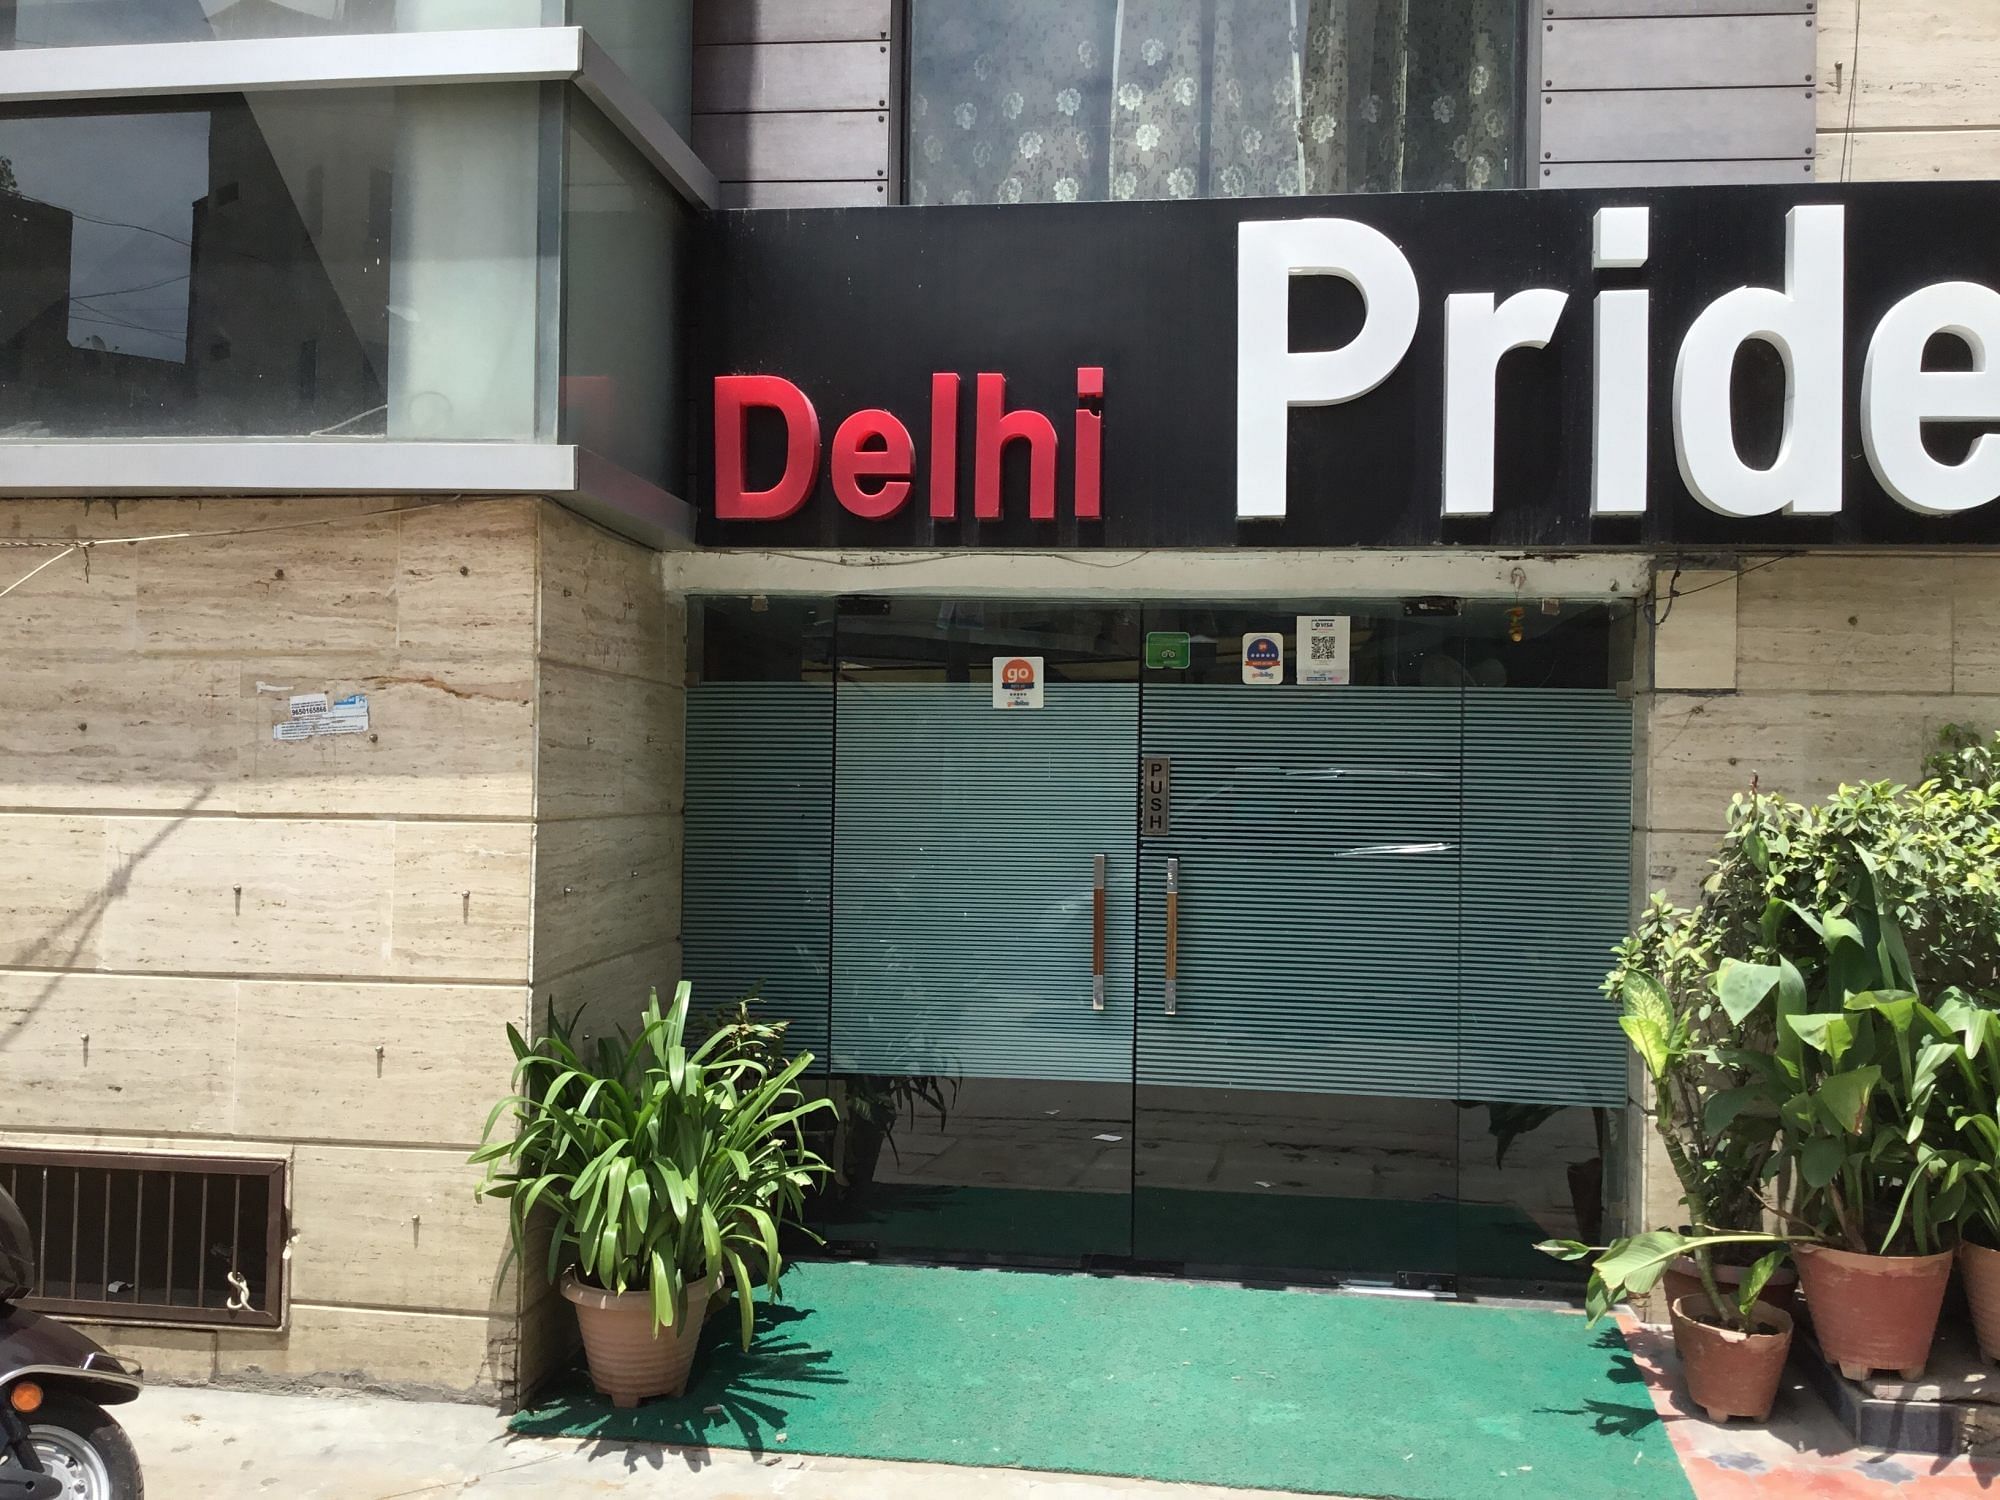 Hotel Delhi Pride in Karol Bagh, Delhi